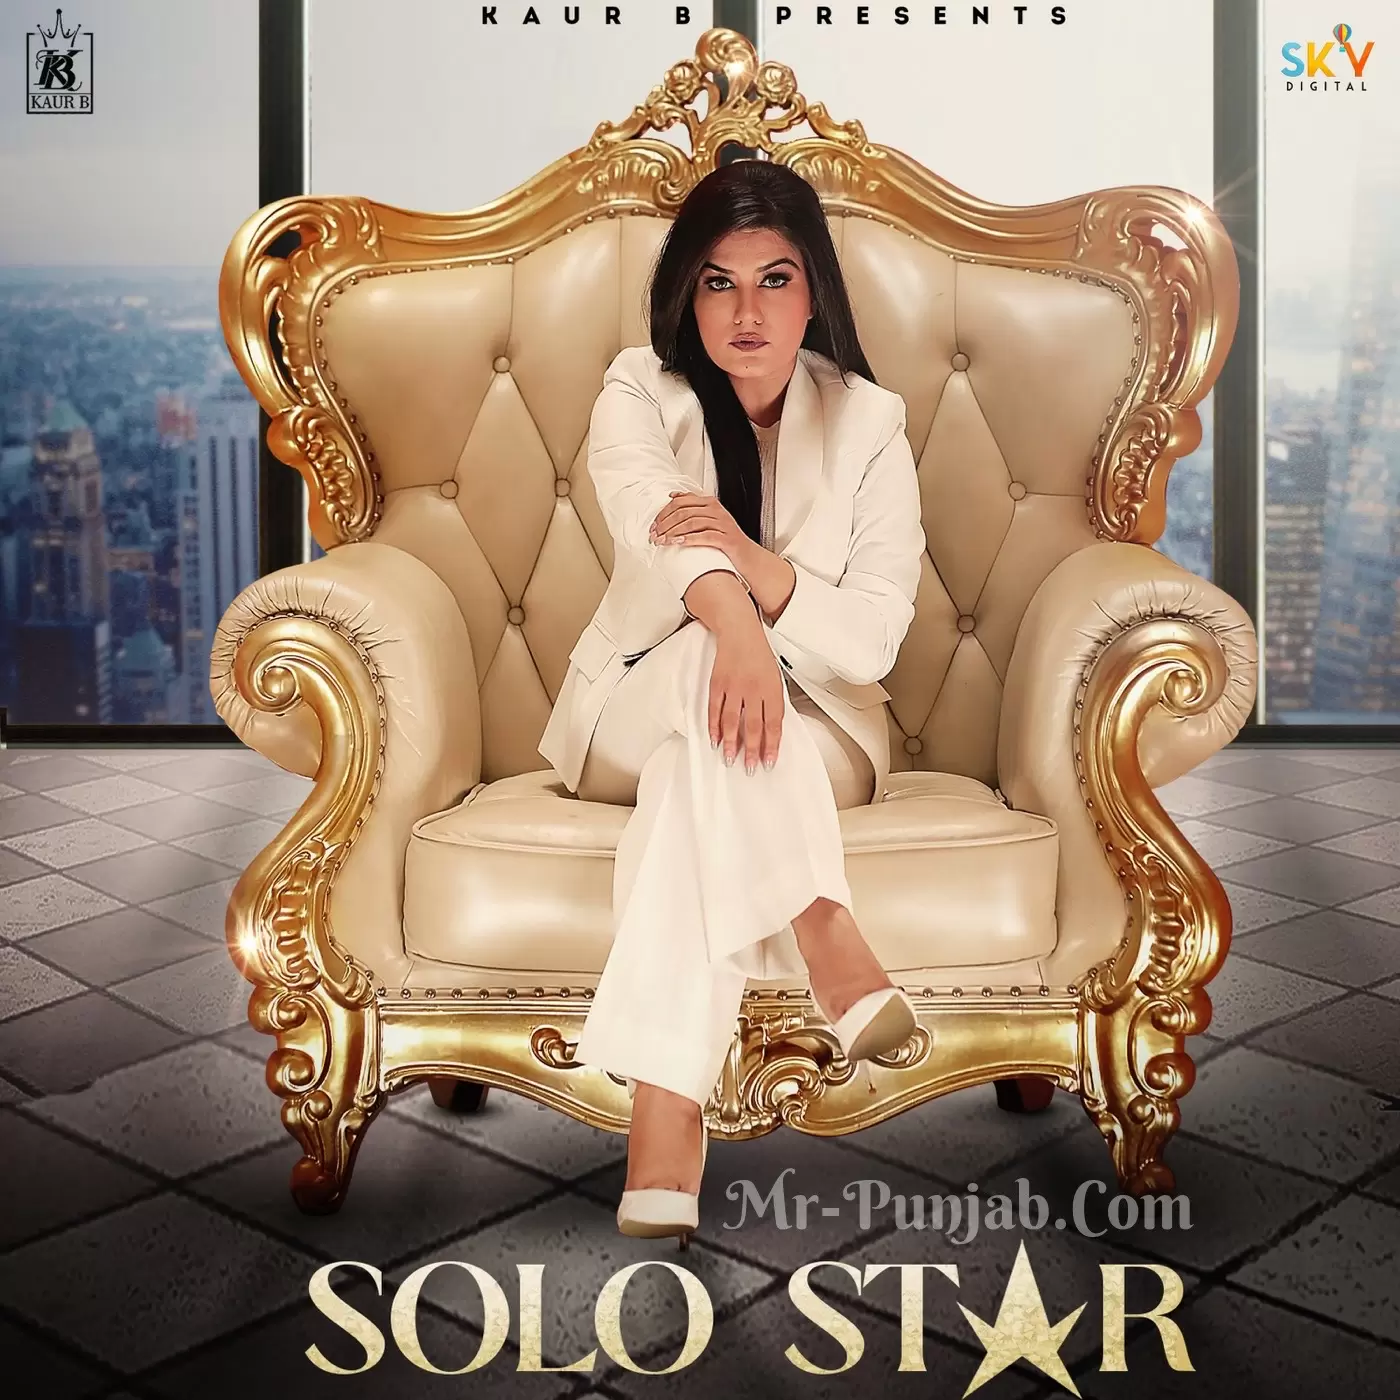 Solo Star Kaur B Mp3 Download Song - Mr-Punjab